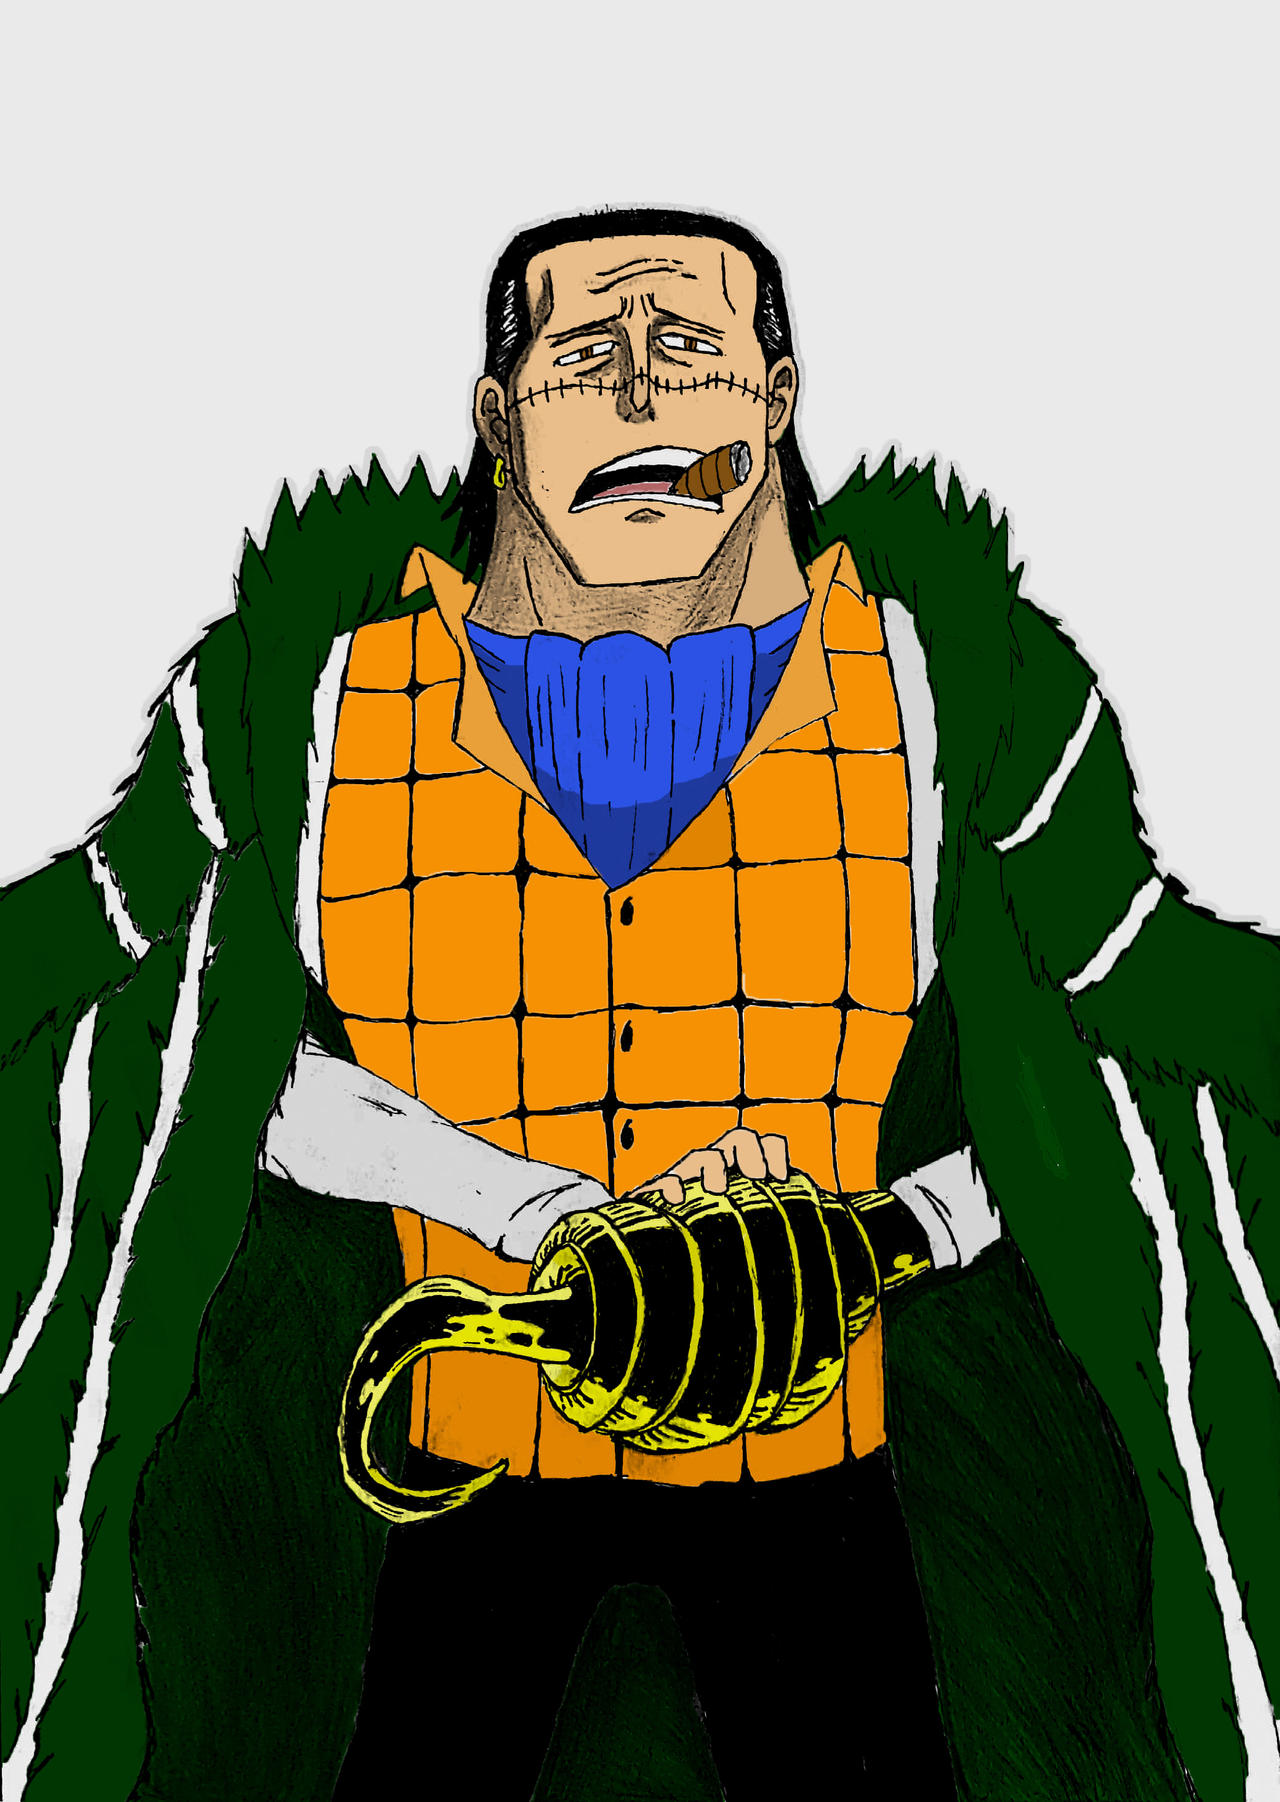 Sir Crocodile (One Piece) by MachineryBuffoon on DeviantArt